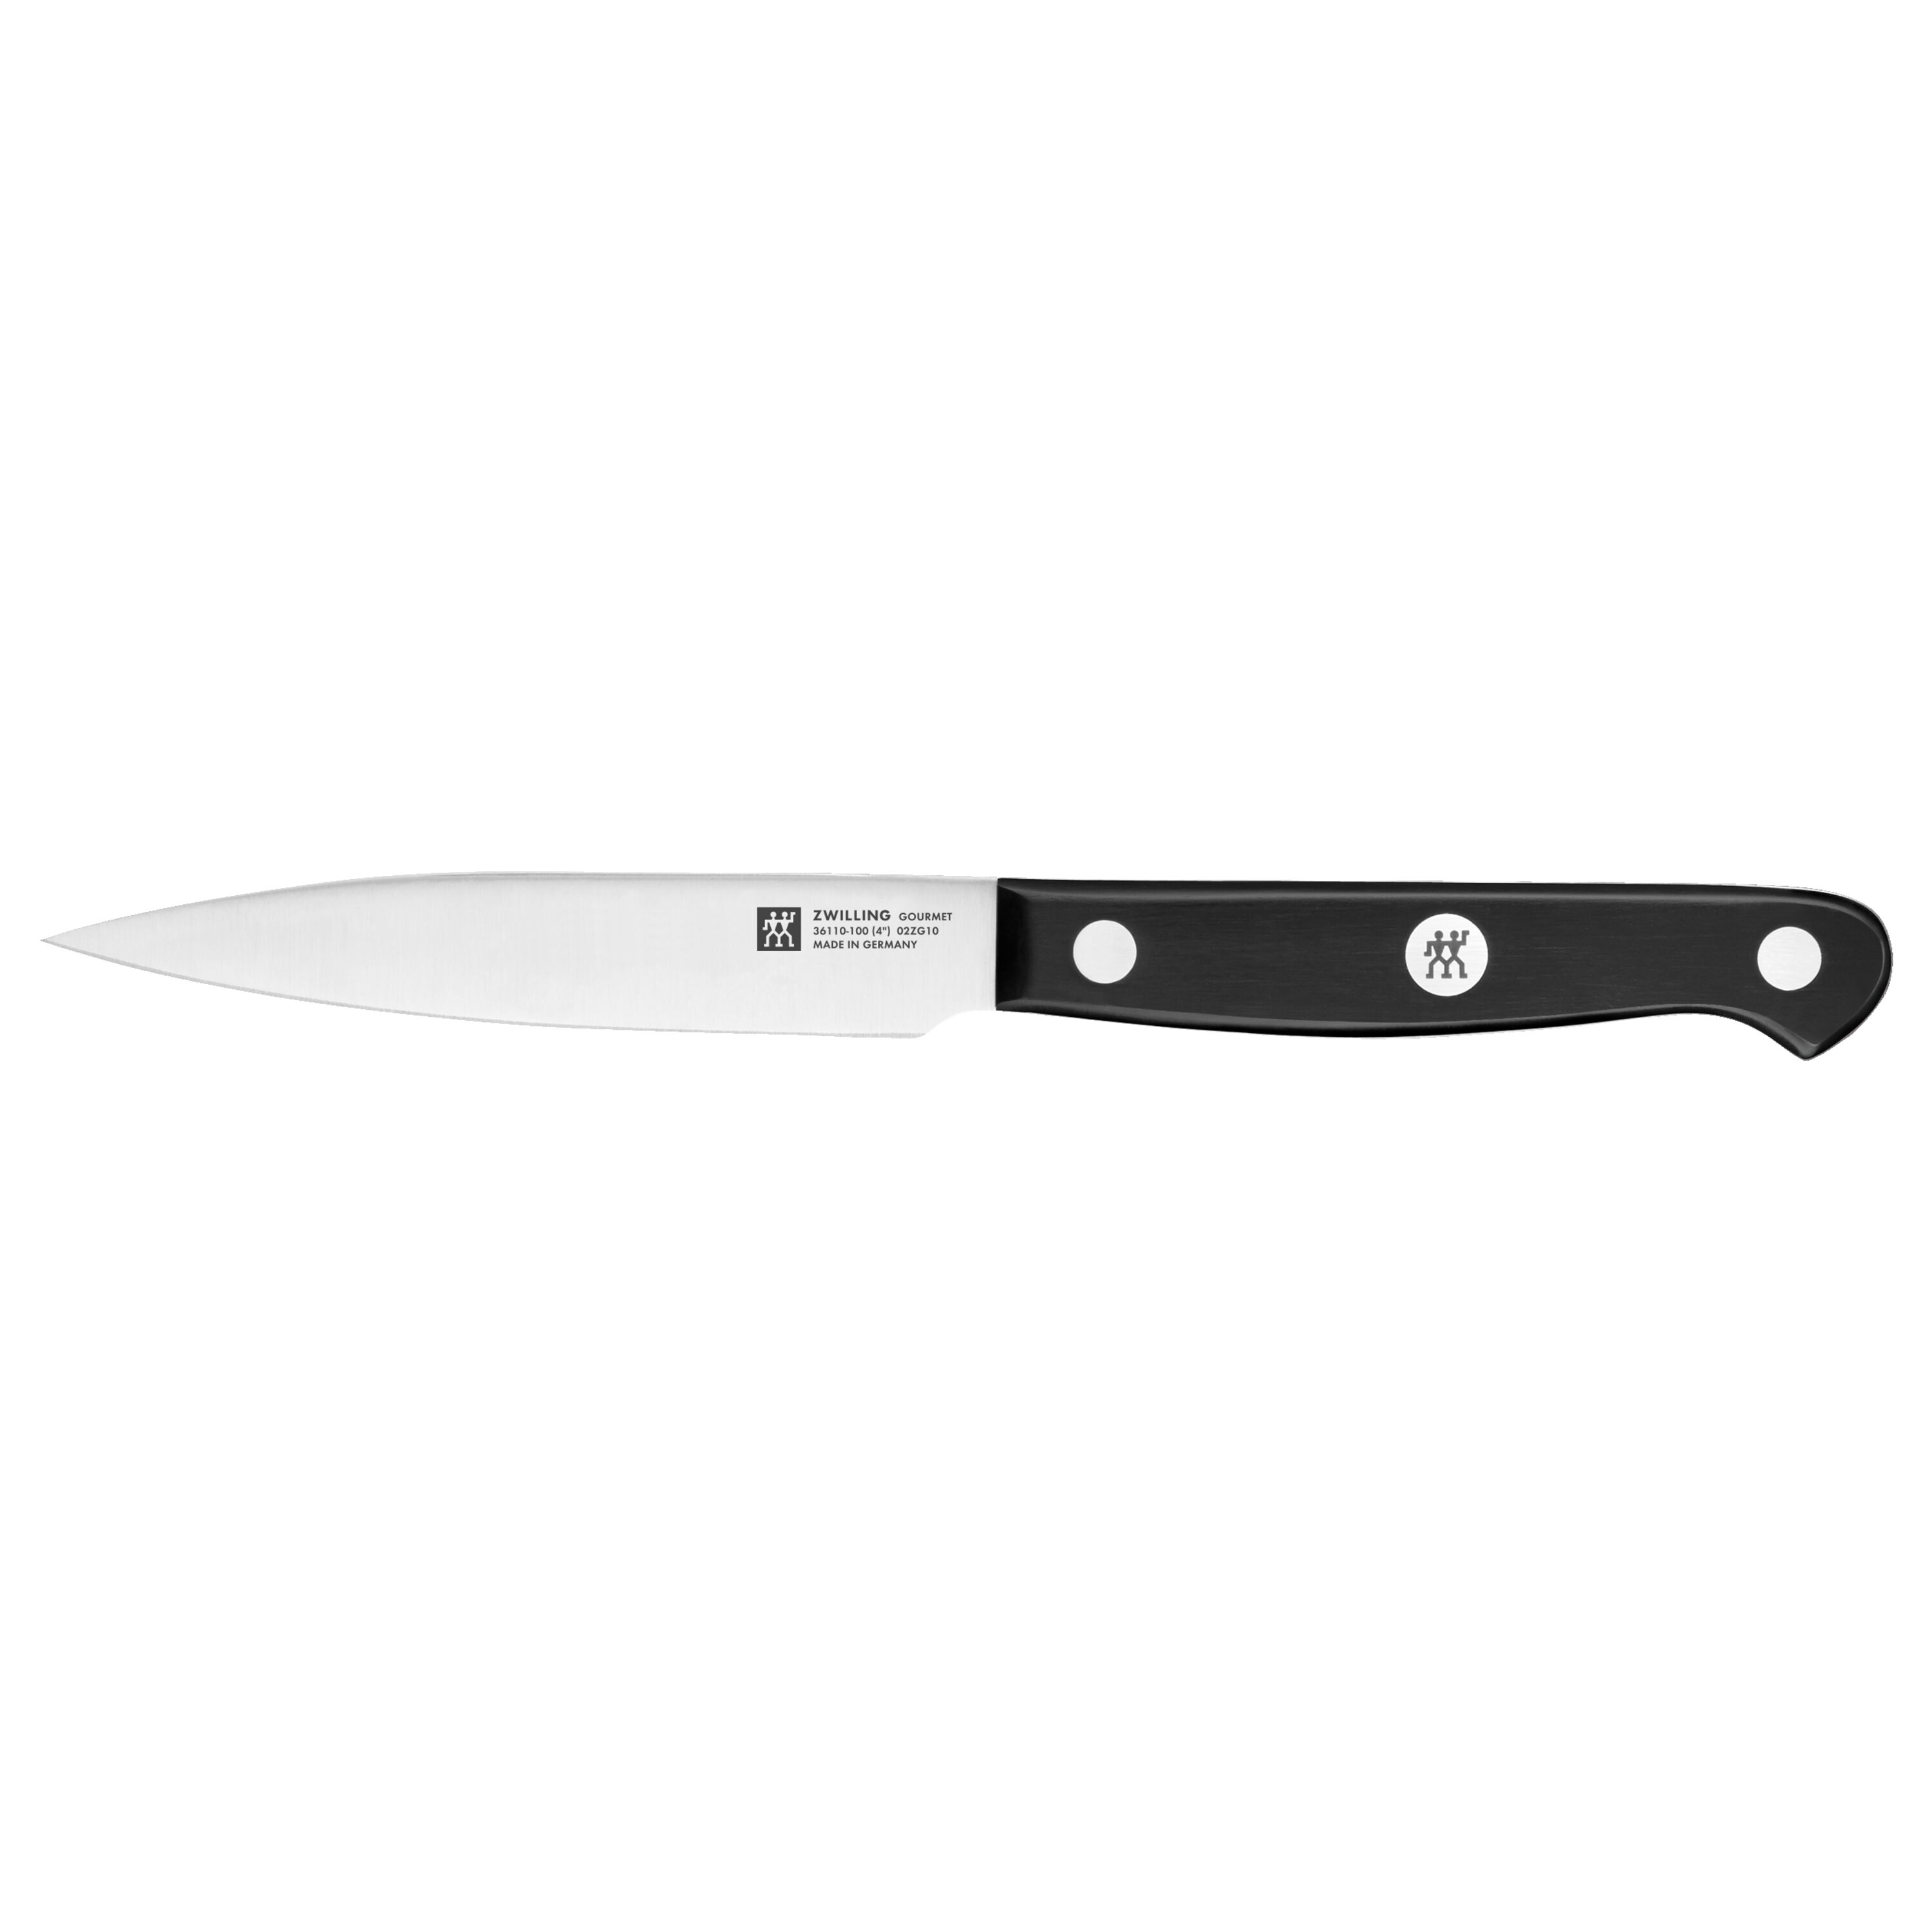 ZWILLING set Buy Knife Gourmet block